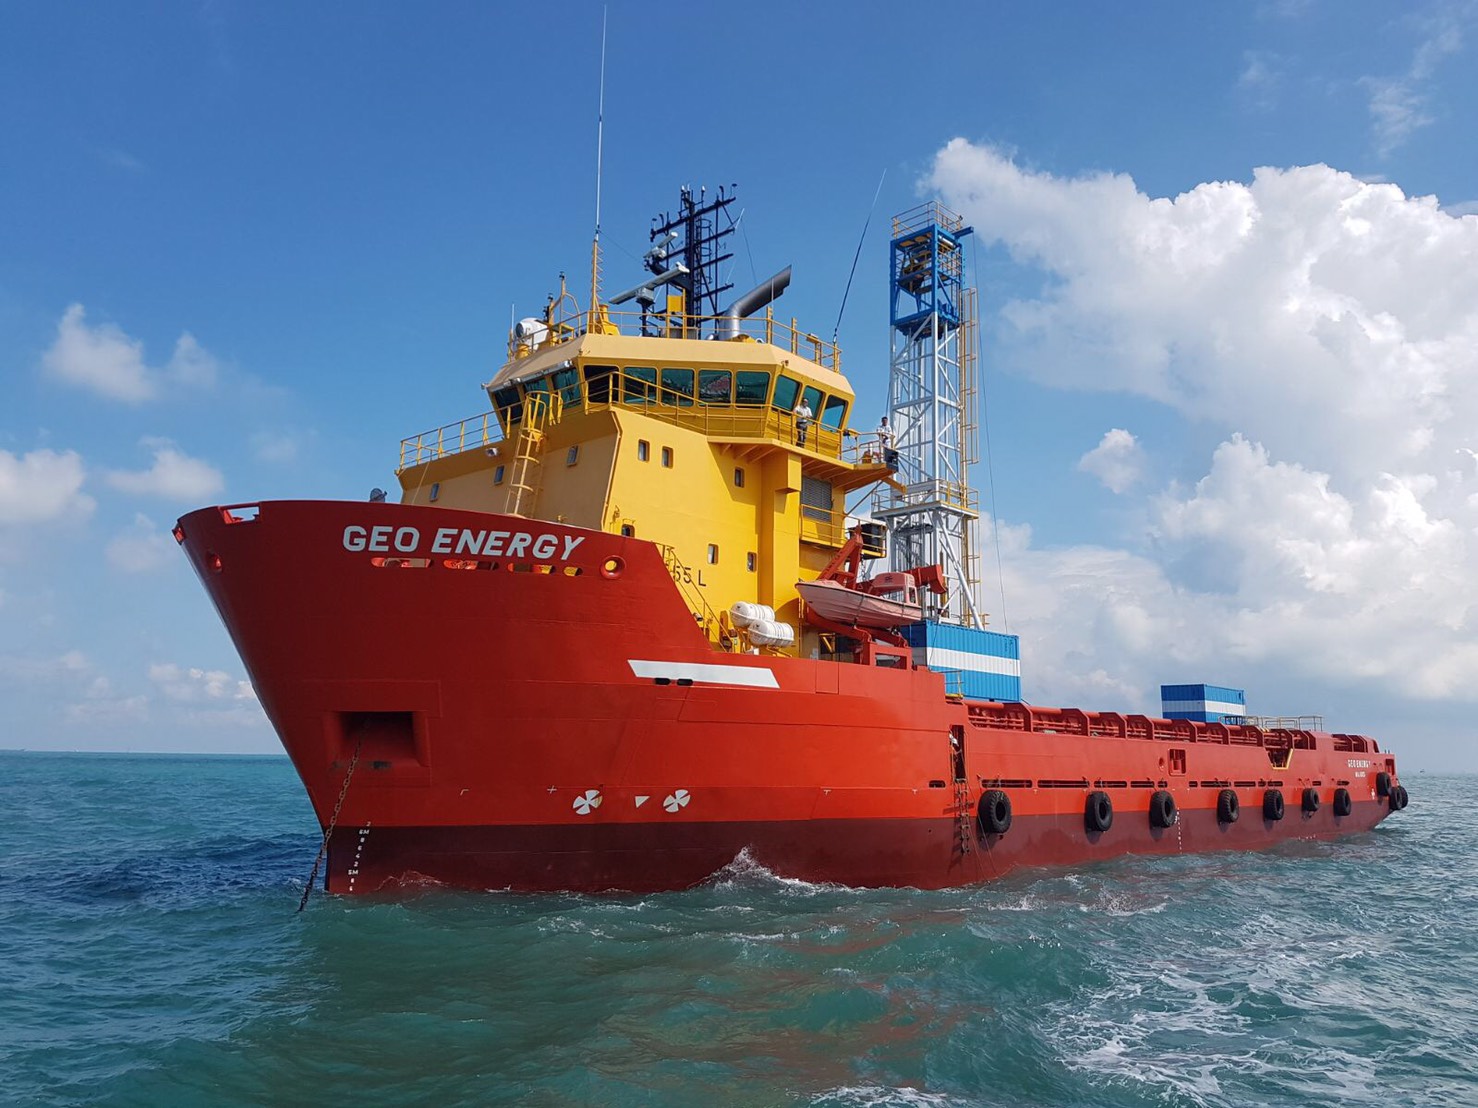 PDE Offshore’s survey vessel, MV Geo Energy is now fitted with Sonardyne’s Mini-Ranger 2 Ultra-Short BaseLine (USBL) system